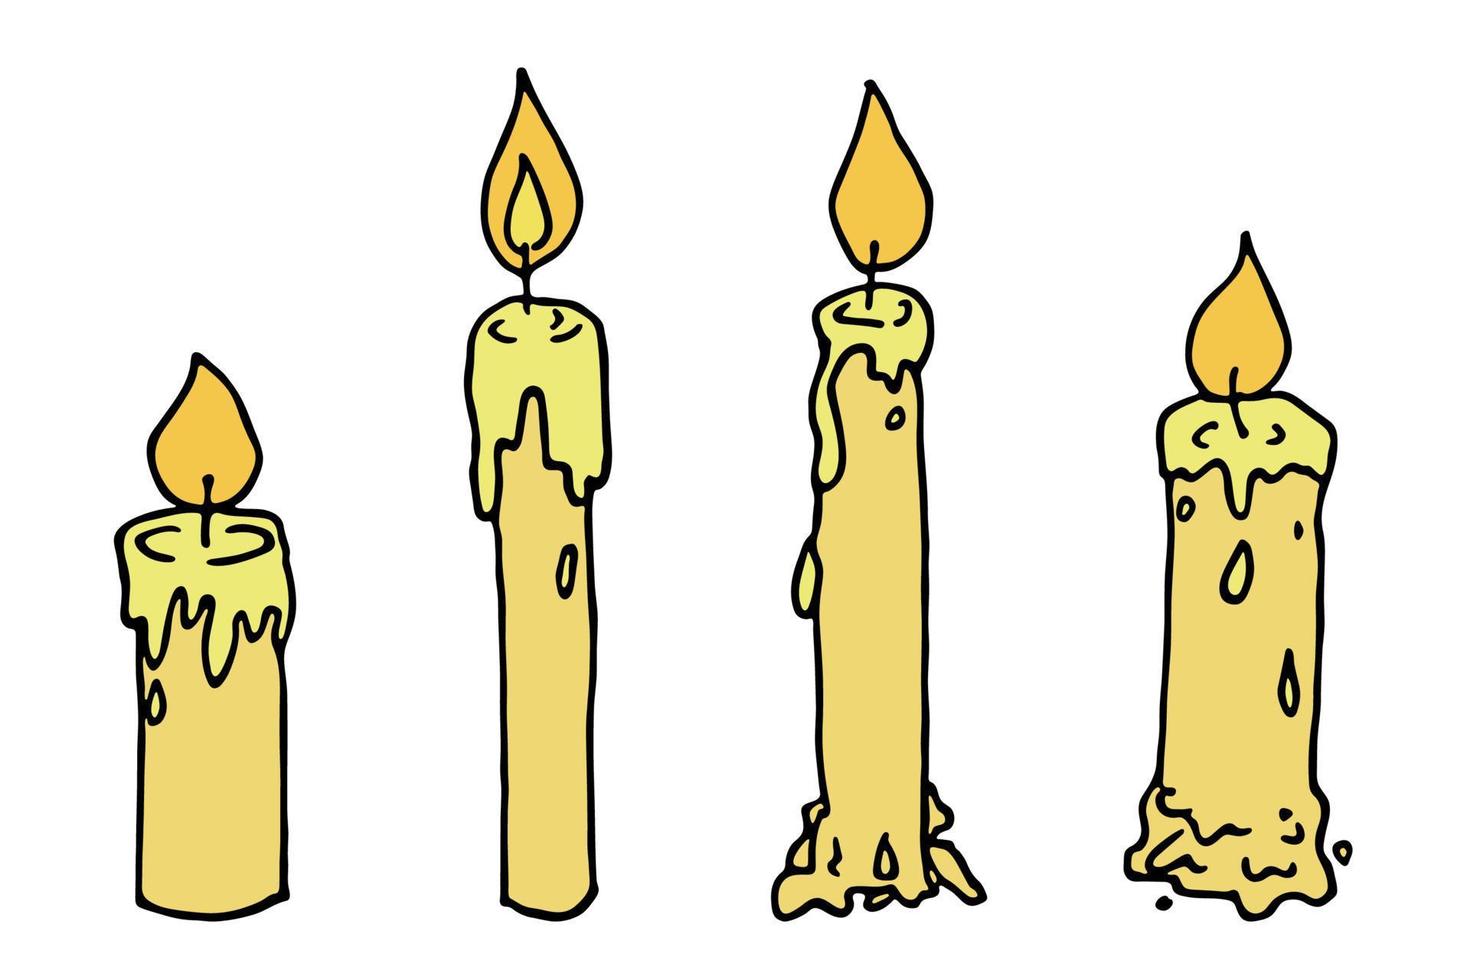 Burning candle set. Doodle illustration. Hand drawn clipart for card, logo, design vector